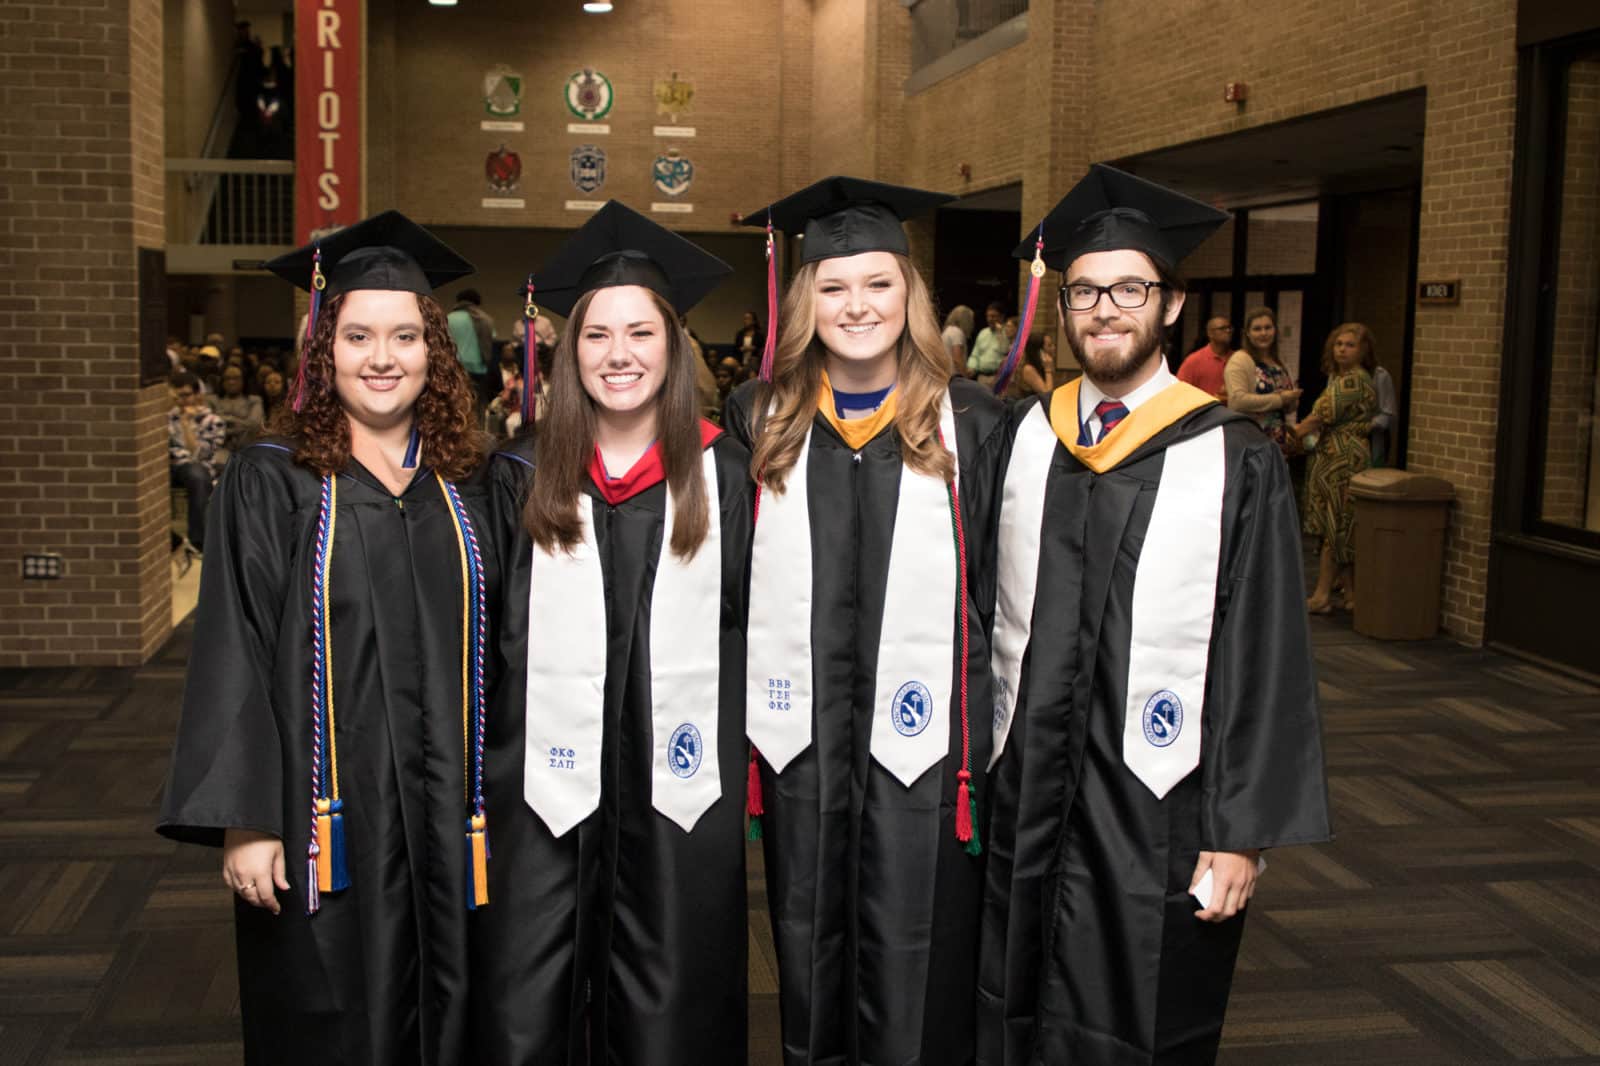 Five FMU graduates receive prestigious Blackwell Award